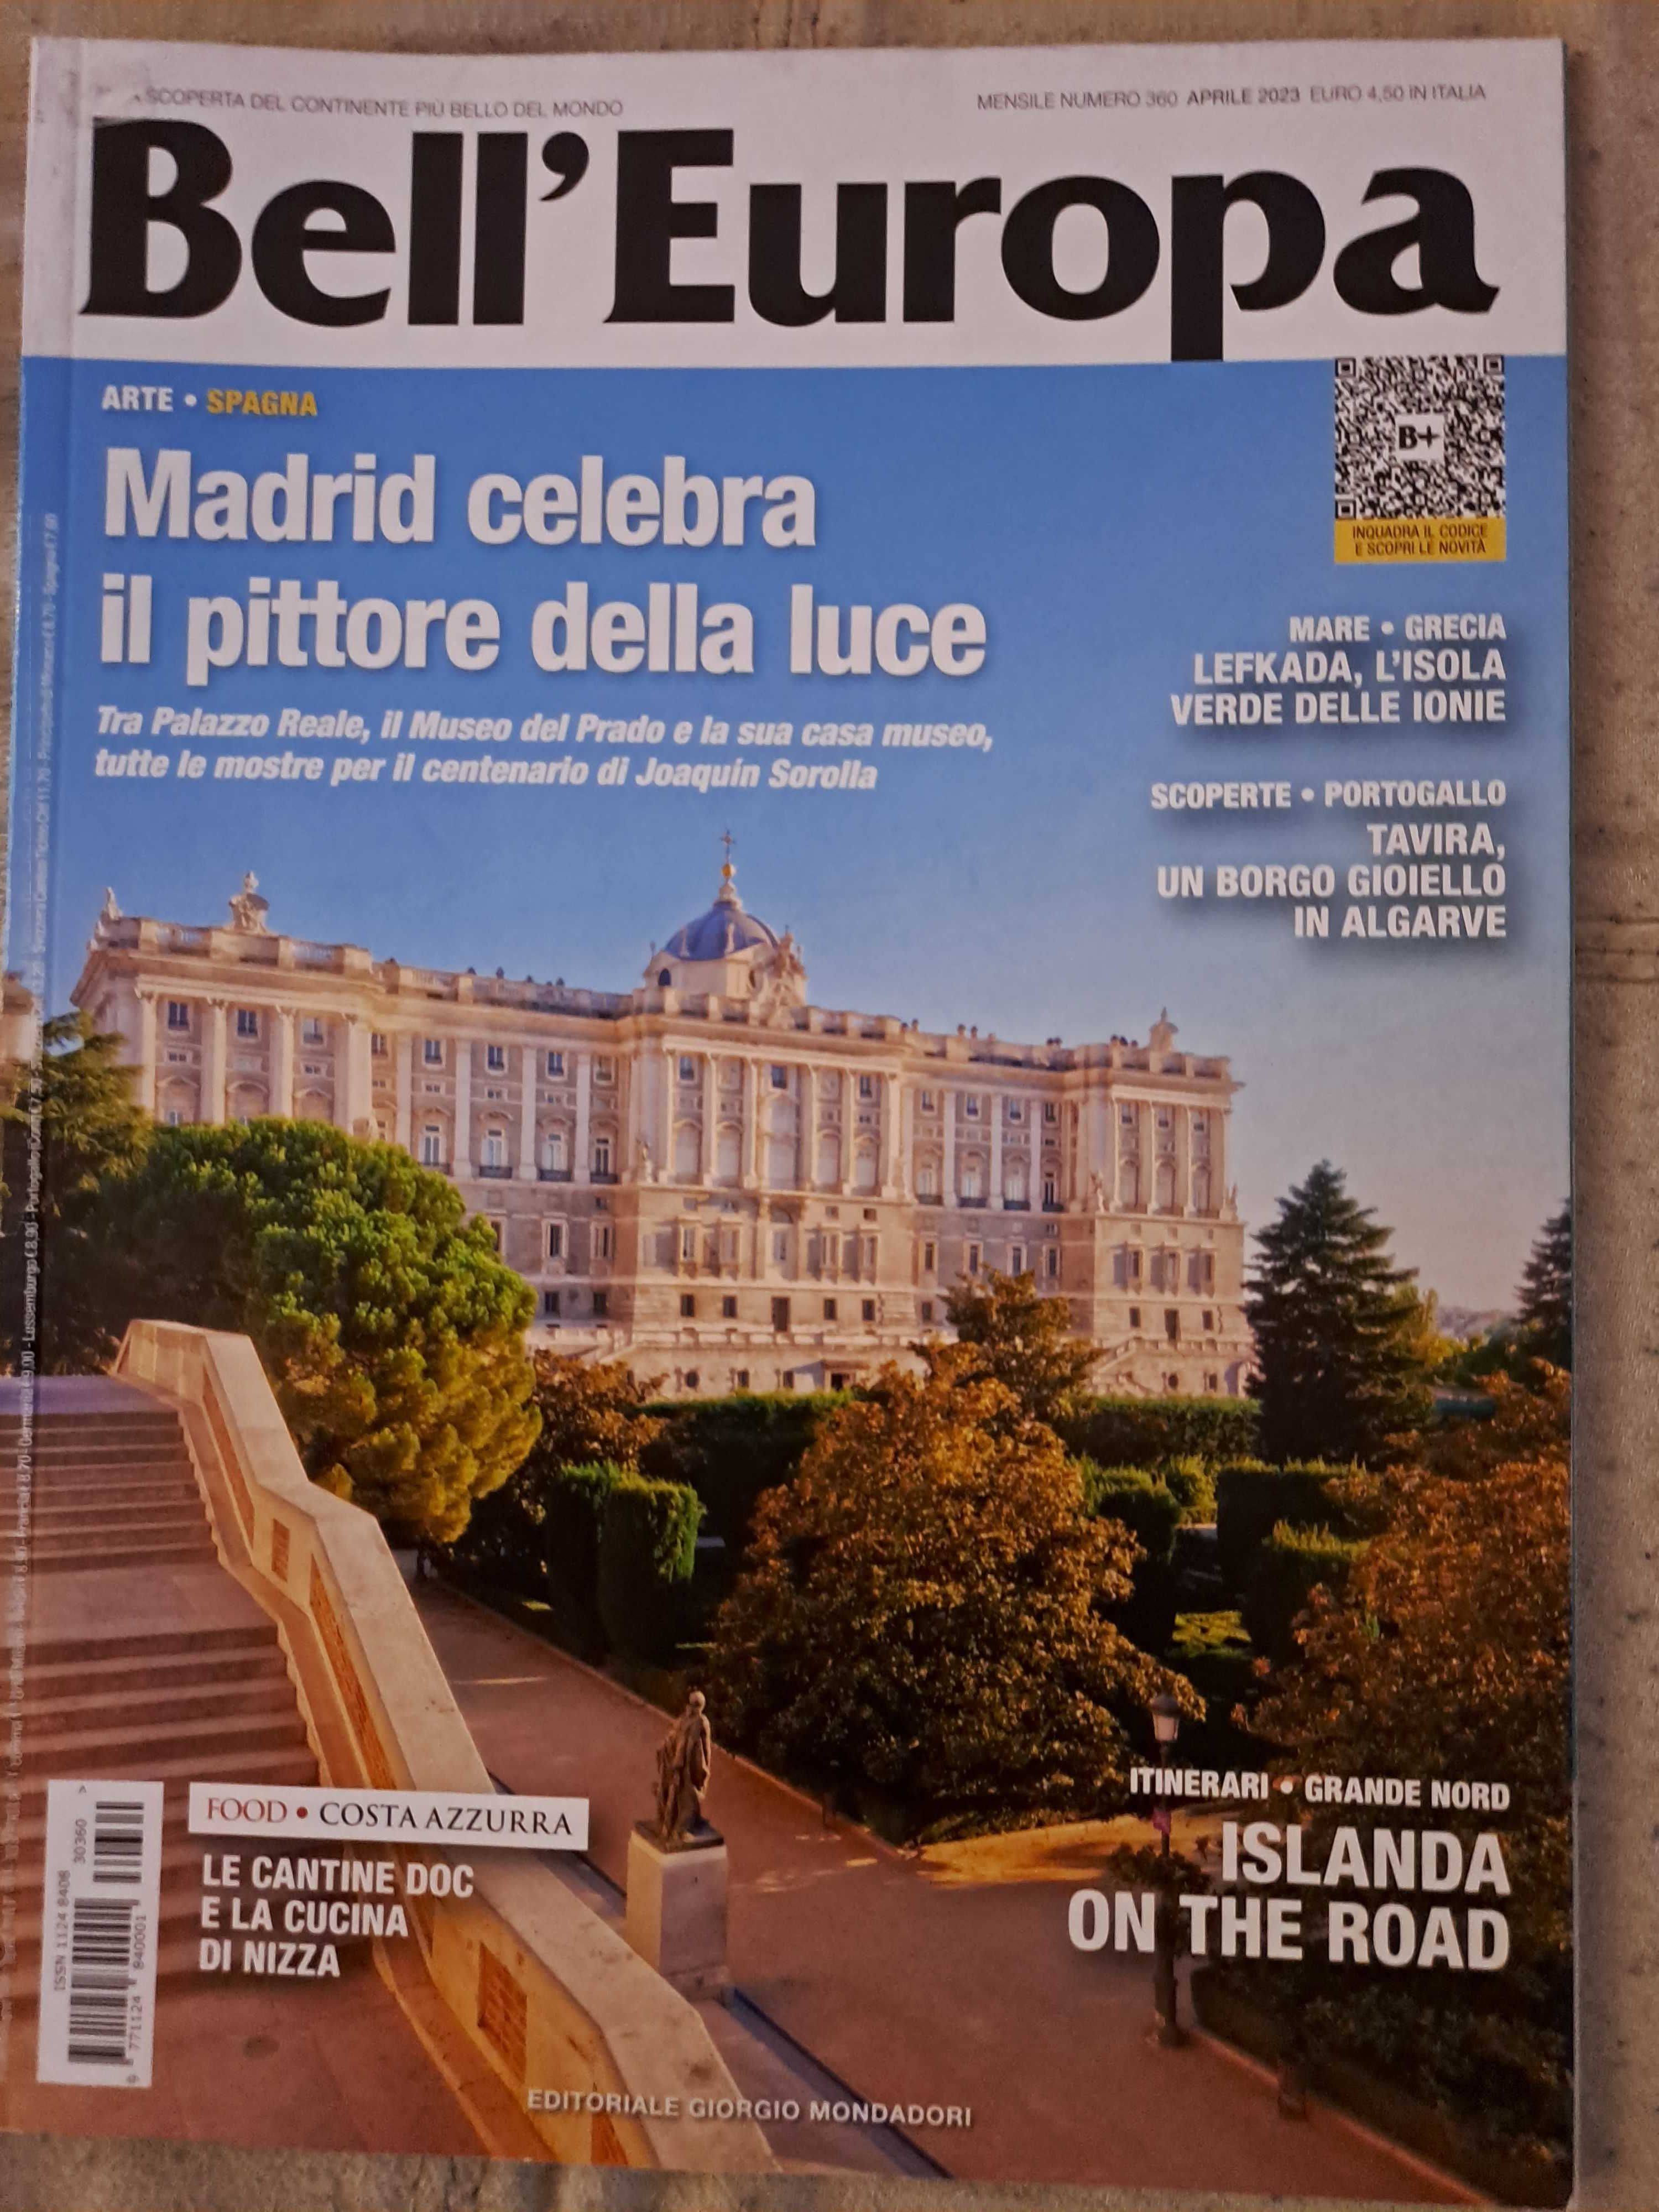 Revistas Dove/In Viaggio/Bell'Europa/Bell'Italia/Observador